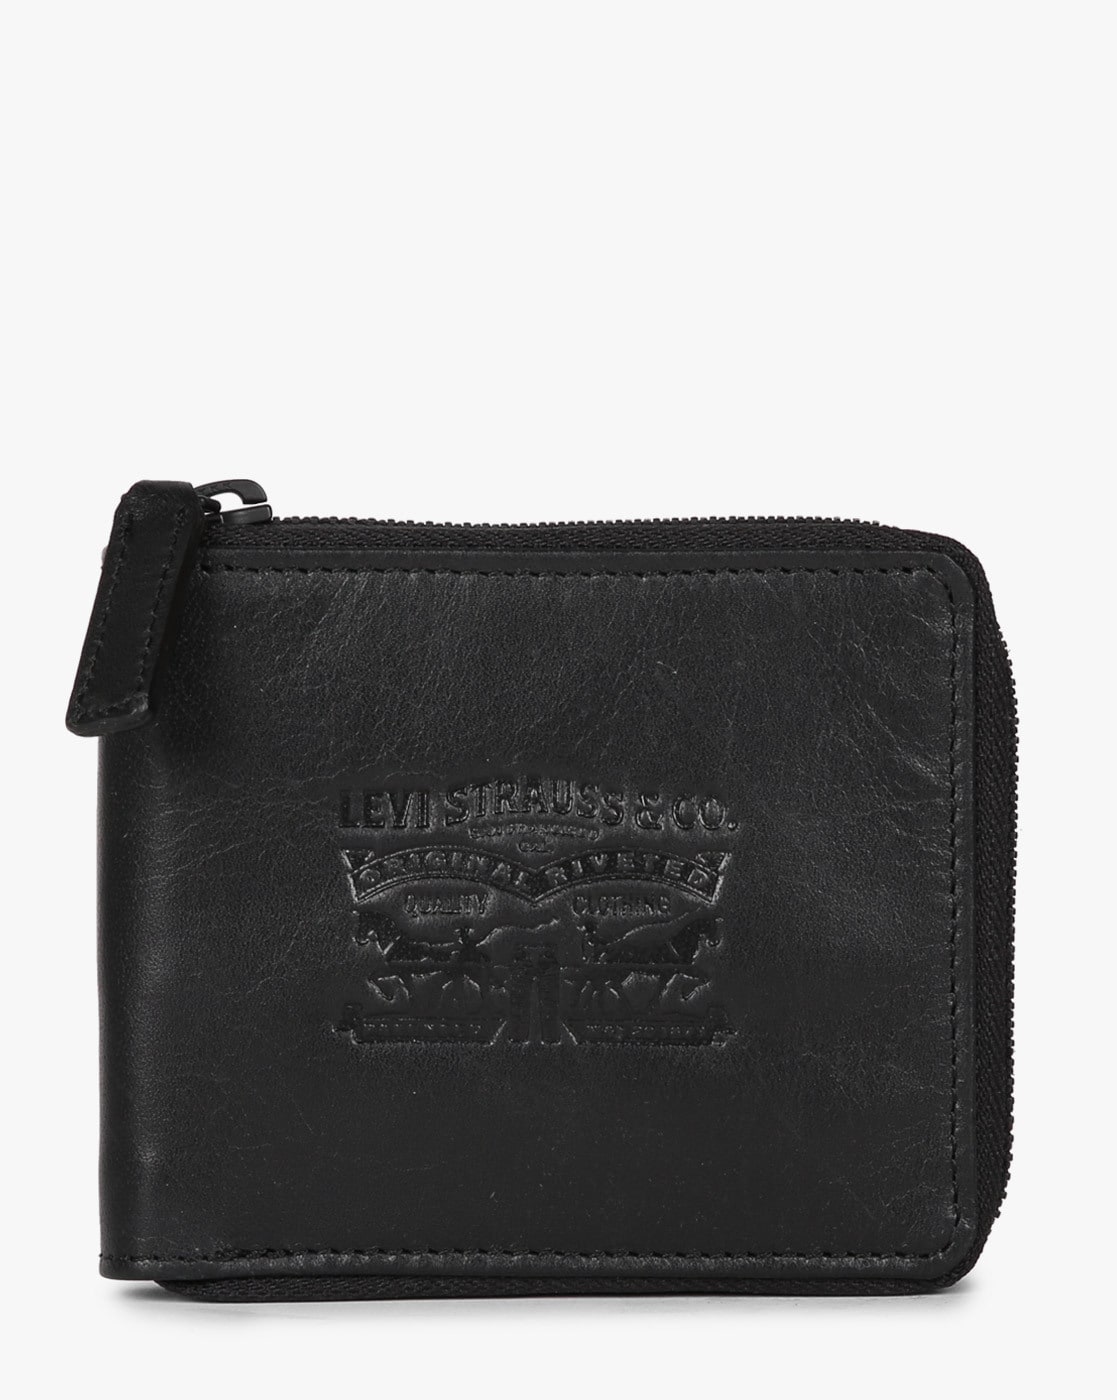 levis zipper wallet